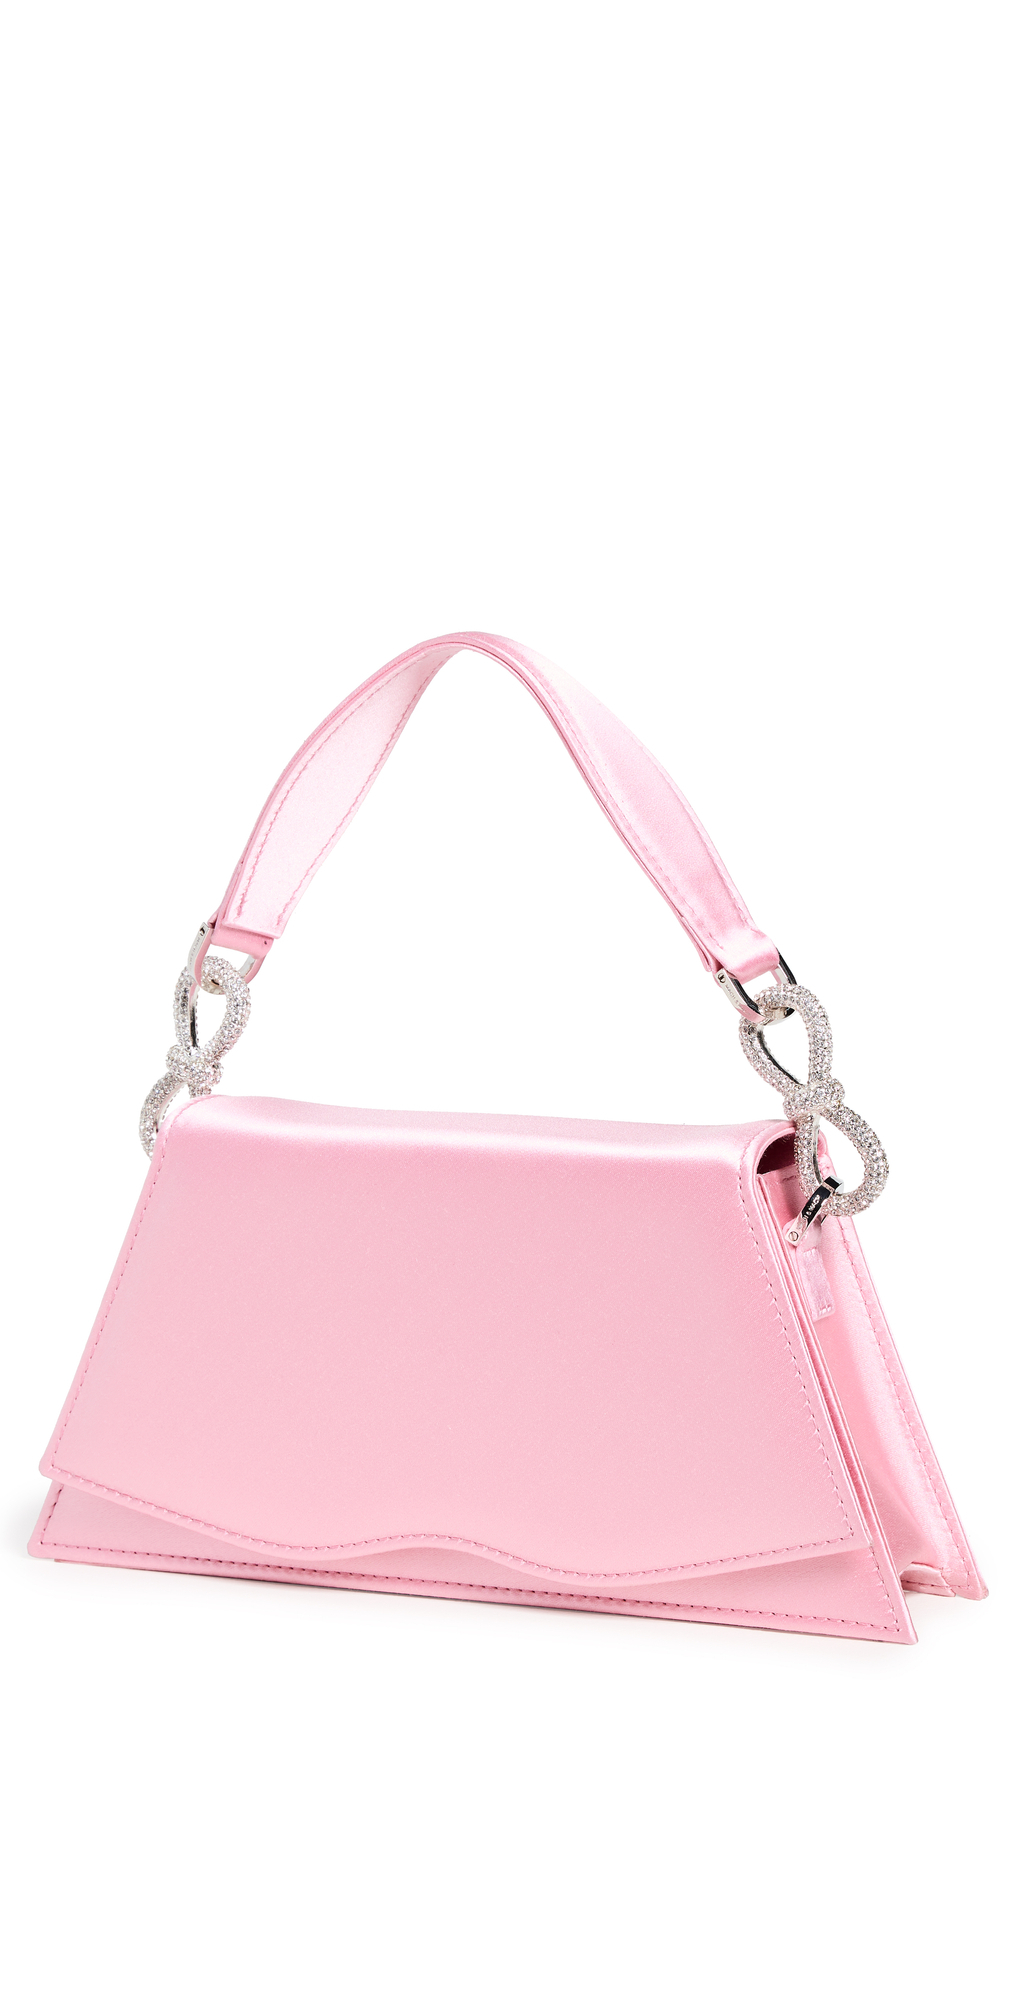 MACH & MACH Samantha Classic Pink Satin Handbag